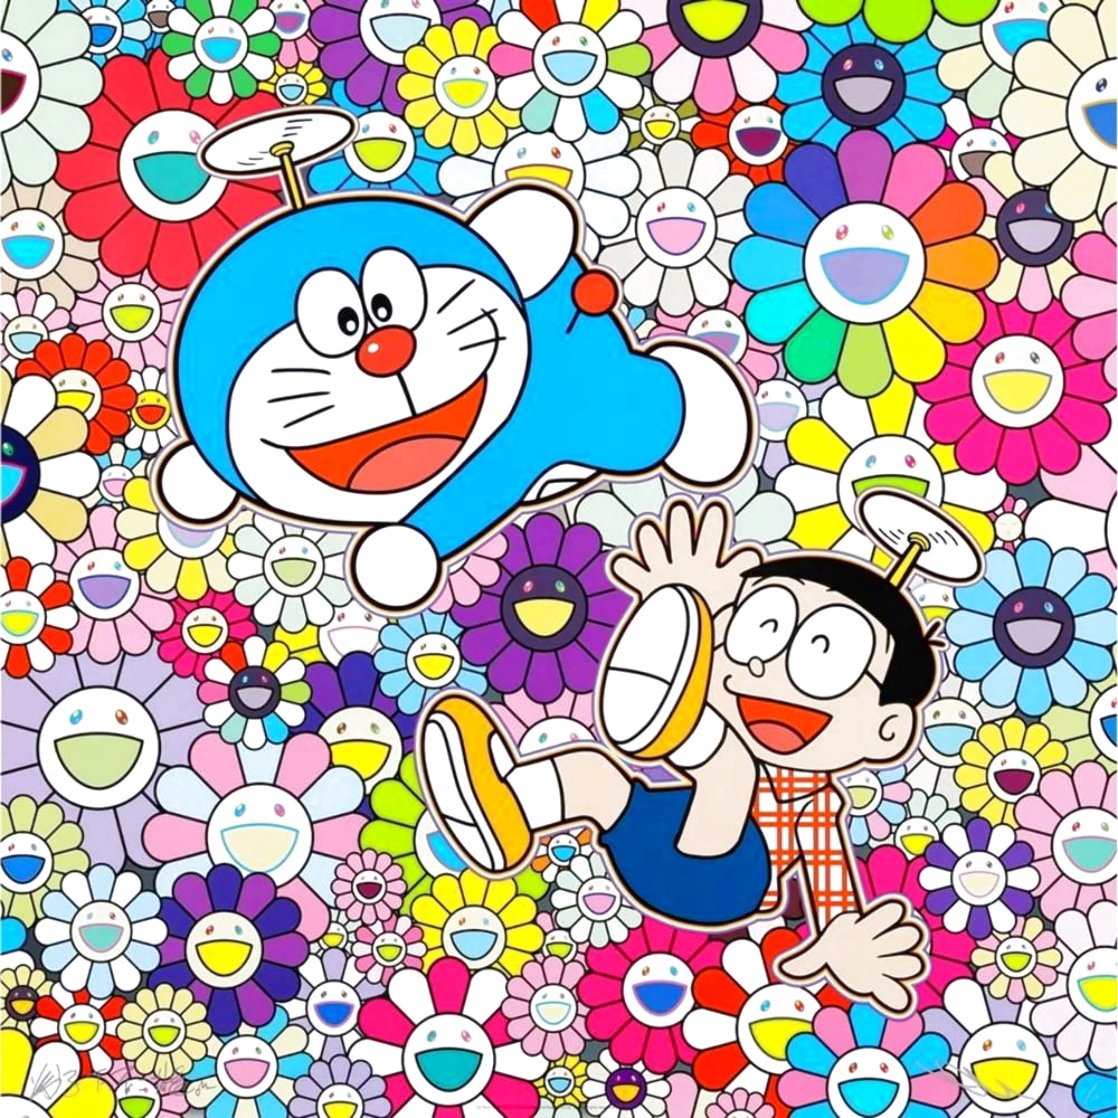 So Much Fun 2020 Limited Edition Print by Takashi Murakami